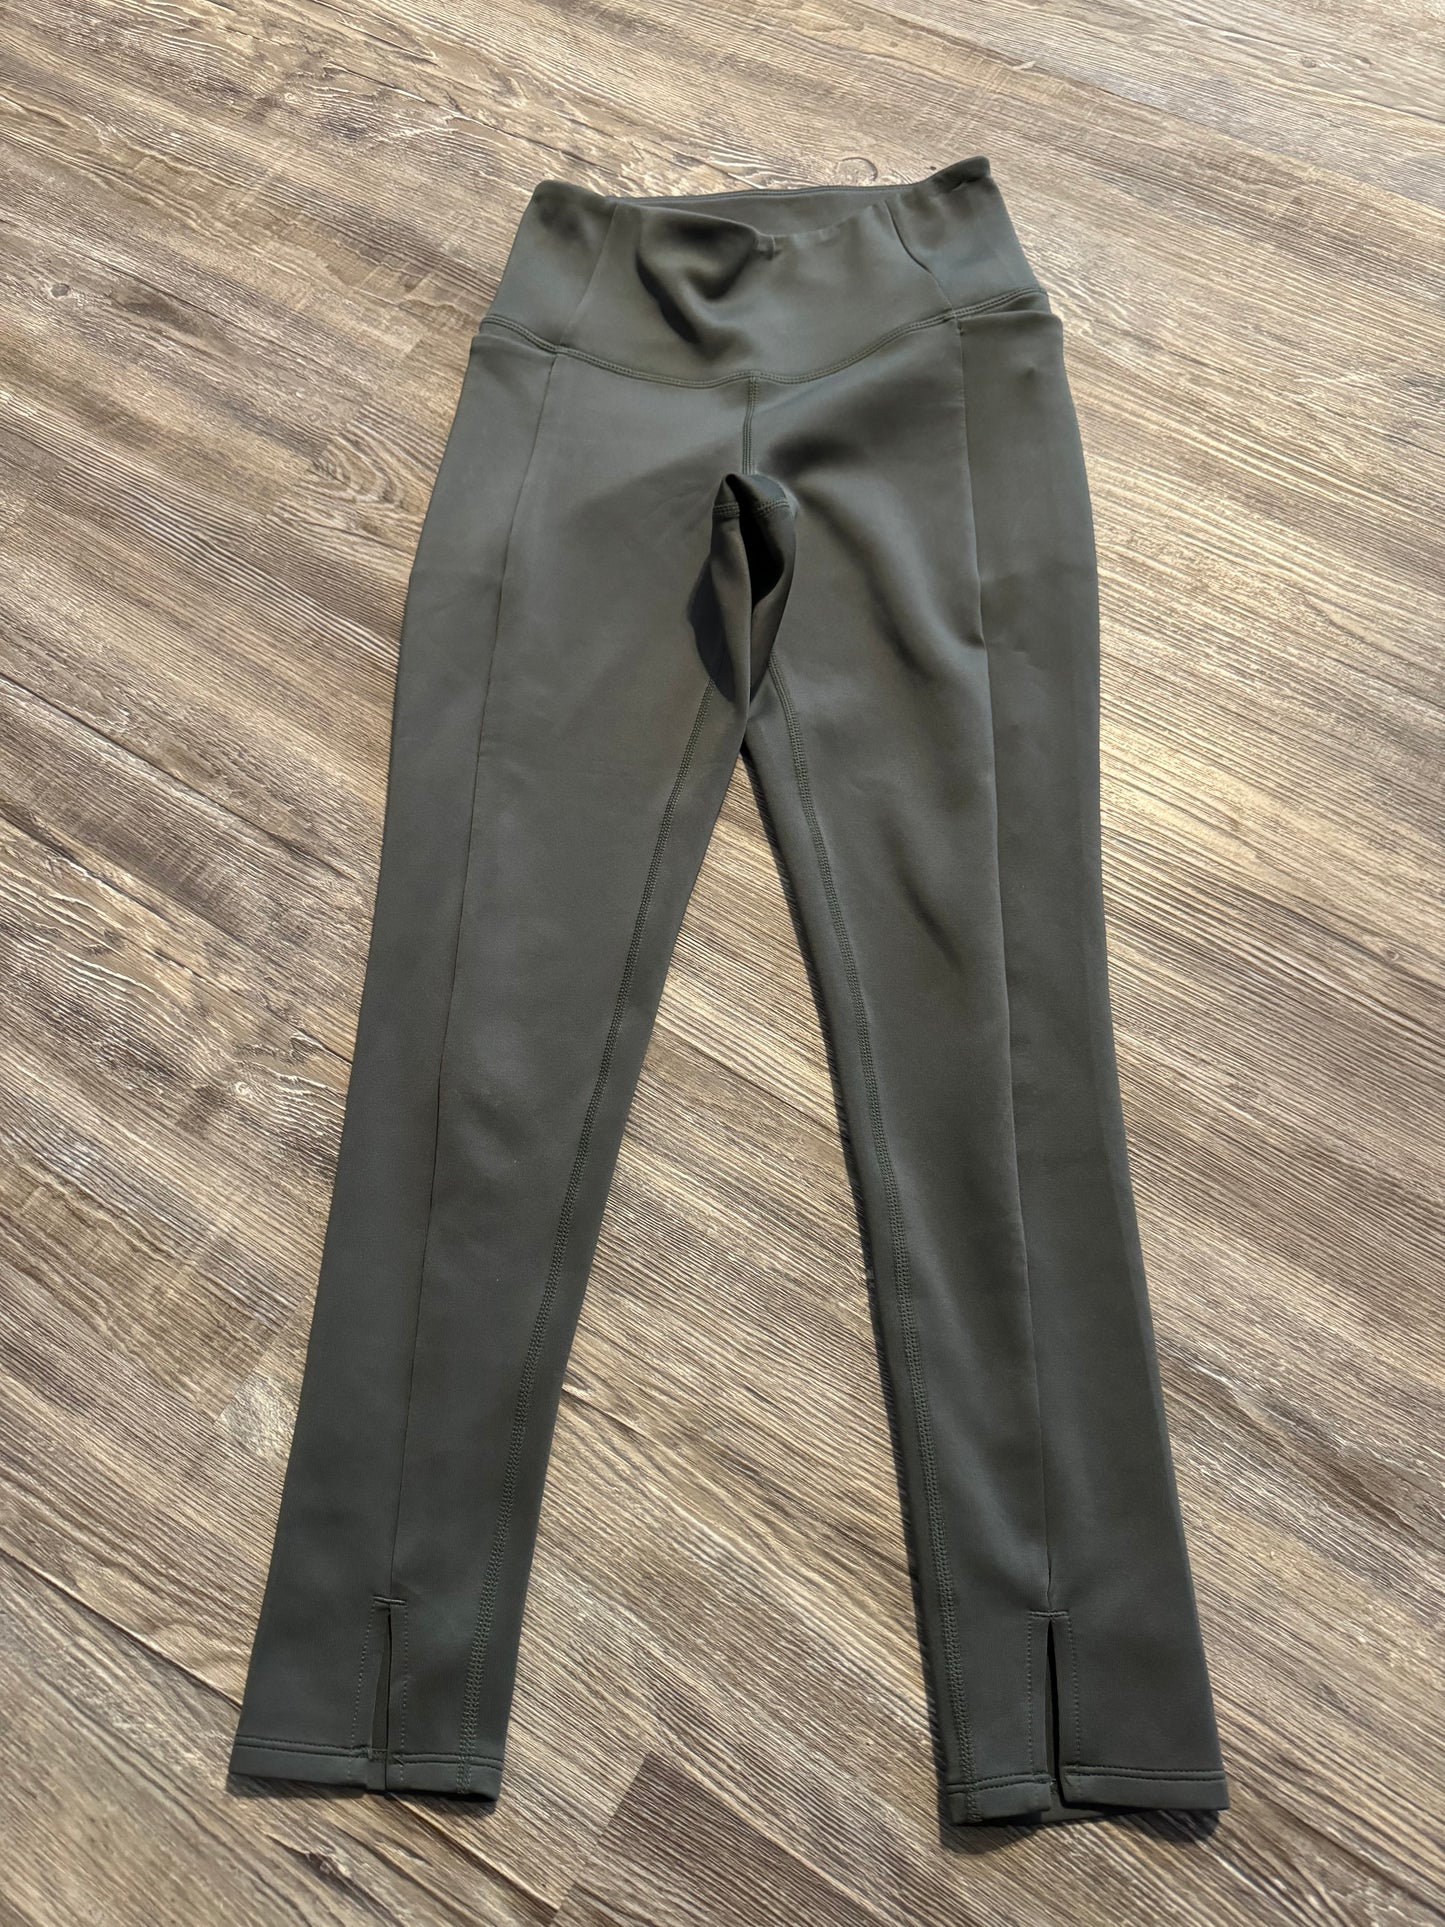 Athletic Pants By Zella  Size: Xs